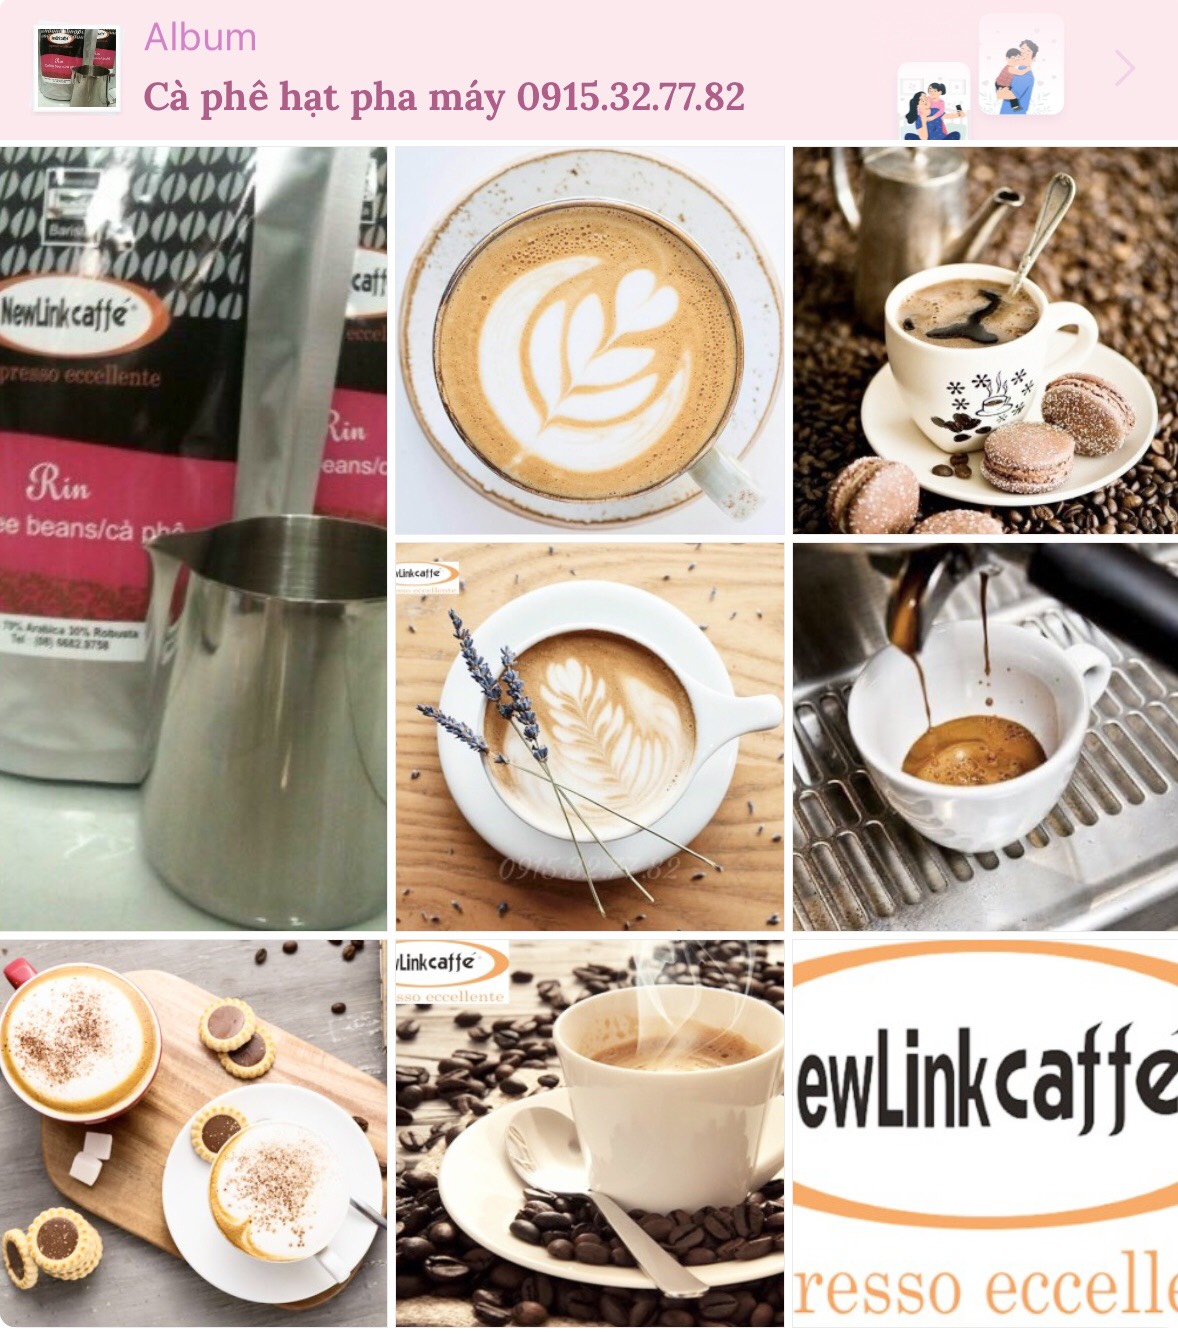 Newlinkcaffe (Espresso) Cà phê hạt pha máy 